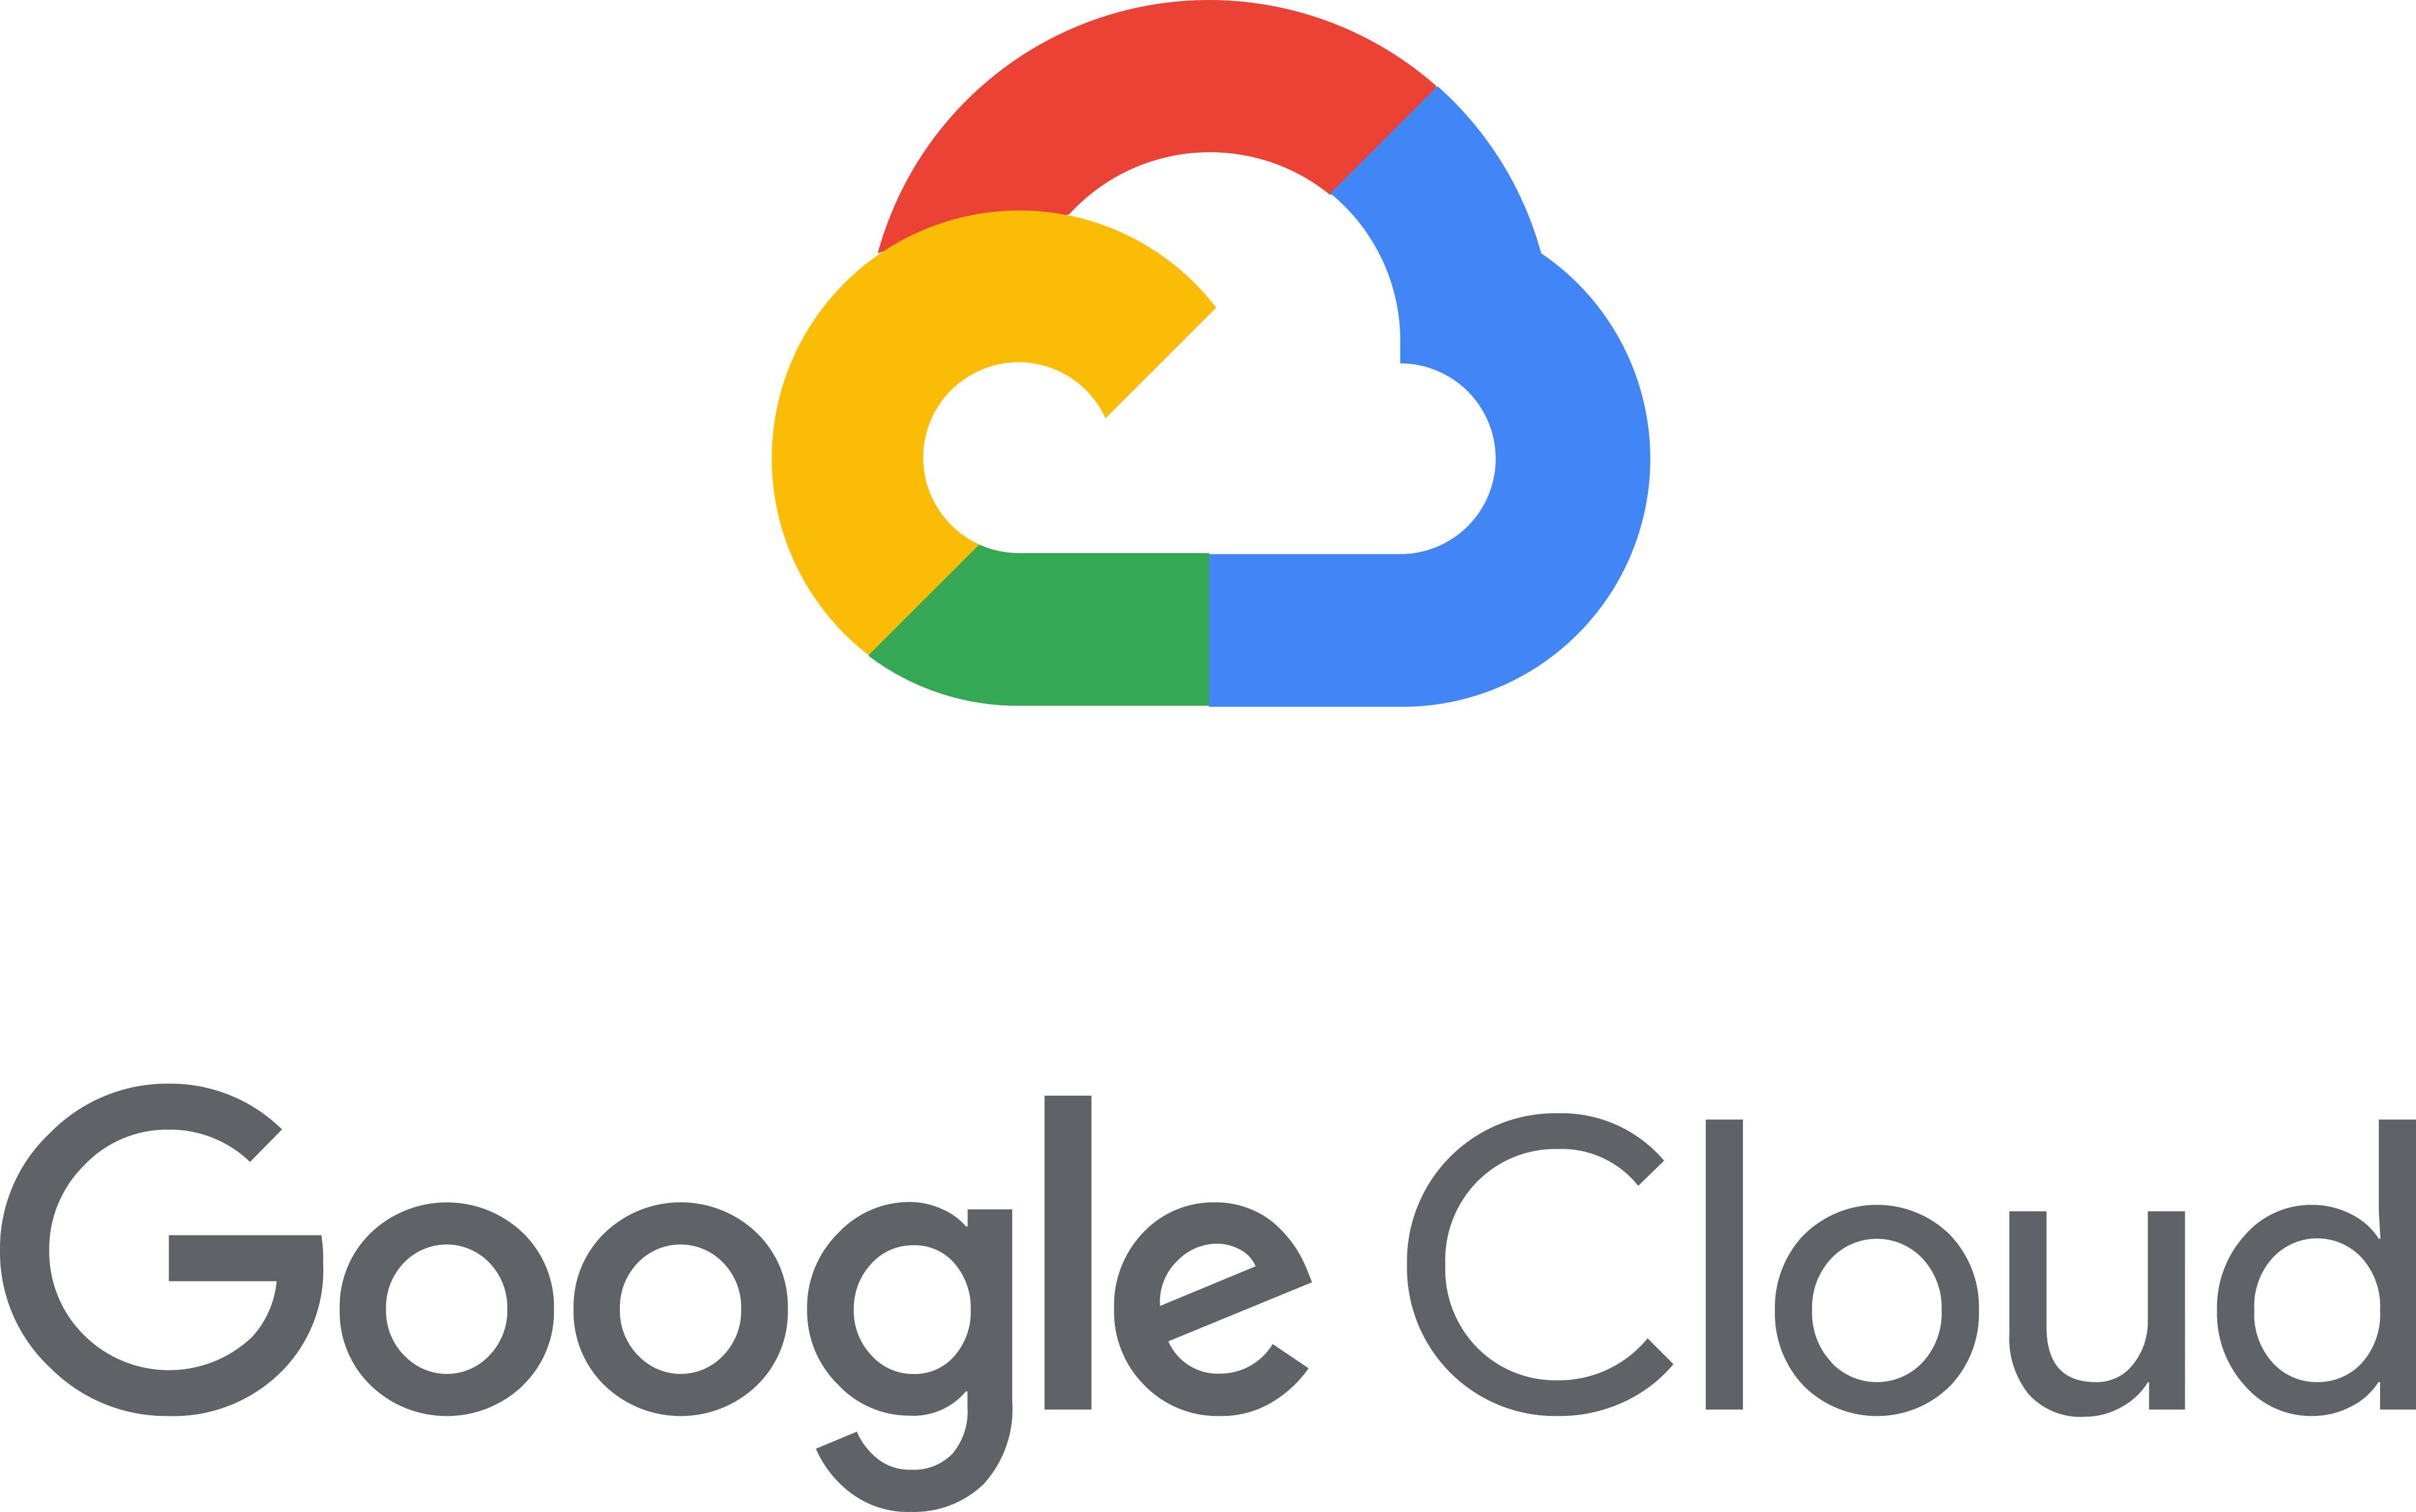 Google Cloud logo. Slyn's business partner.